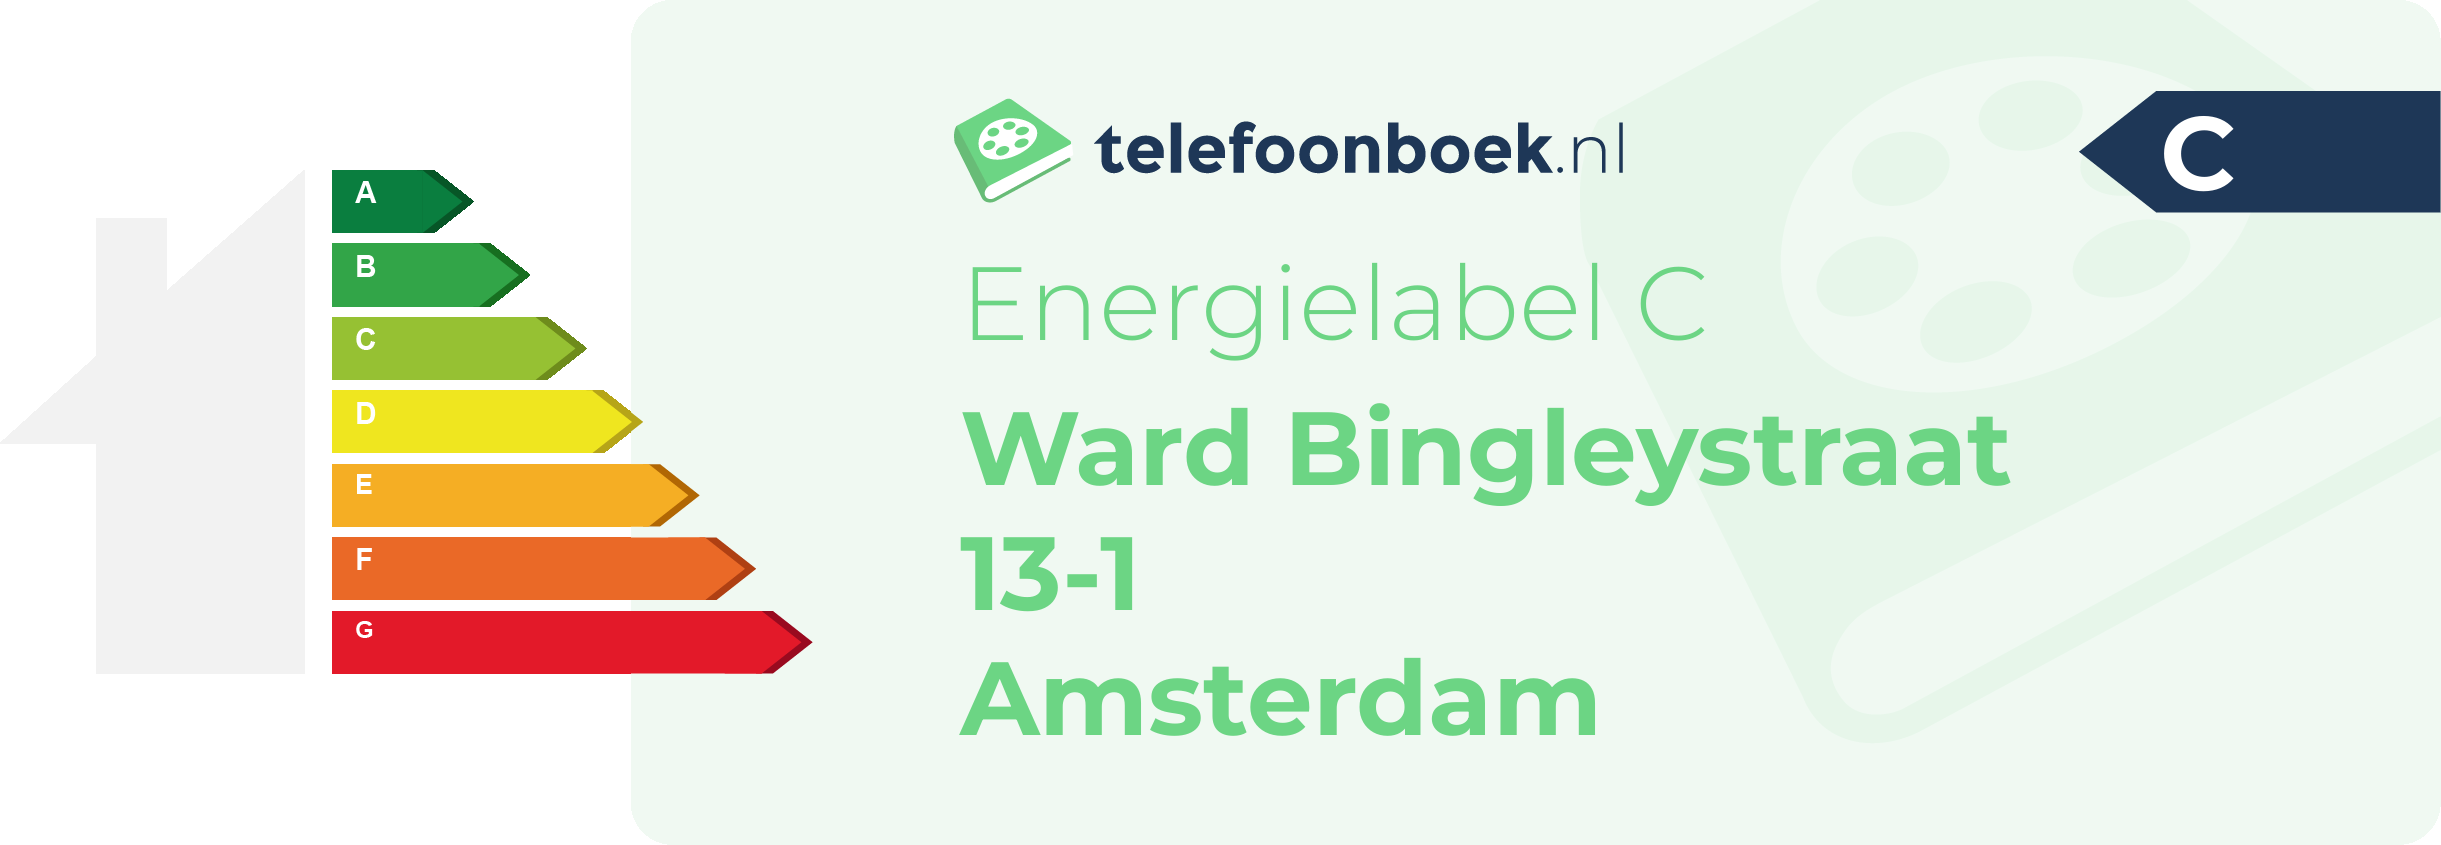 Energielabel Ward Bingleystraat 13-1 Amsterdam